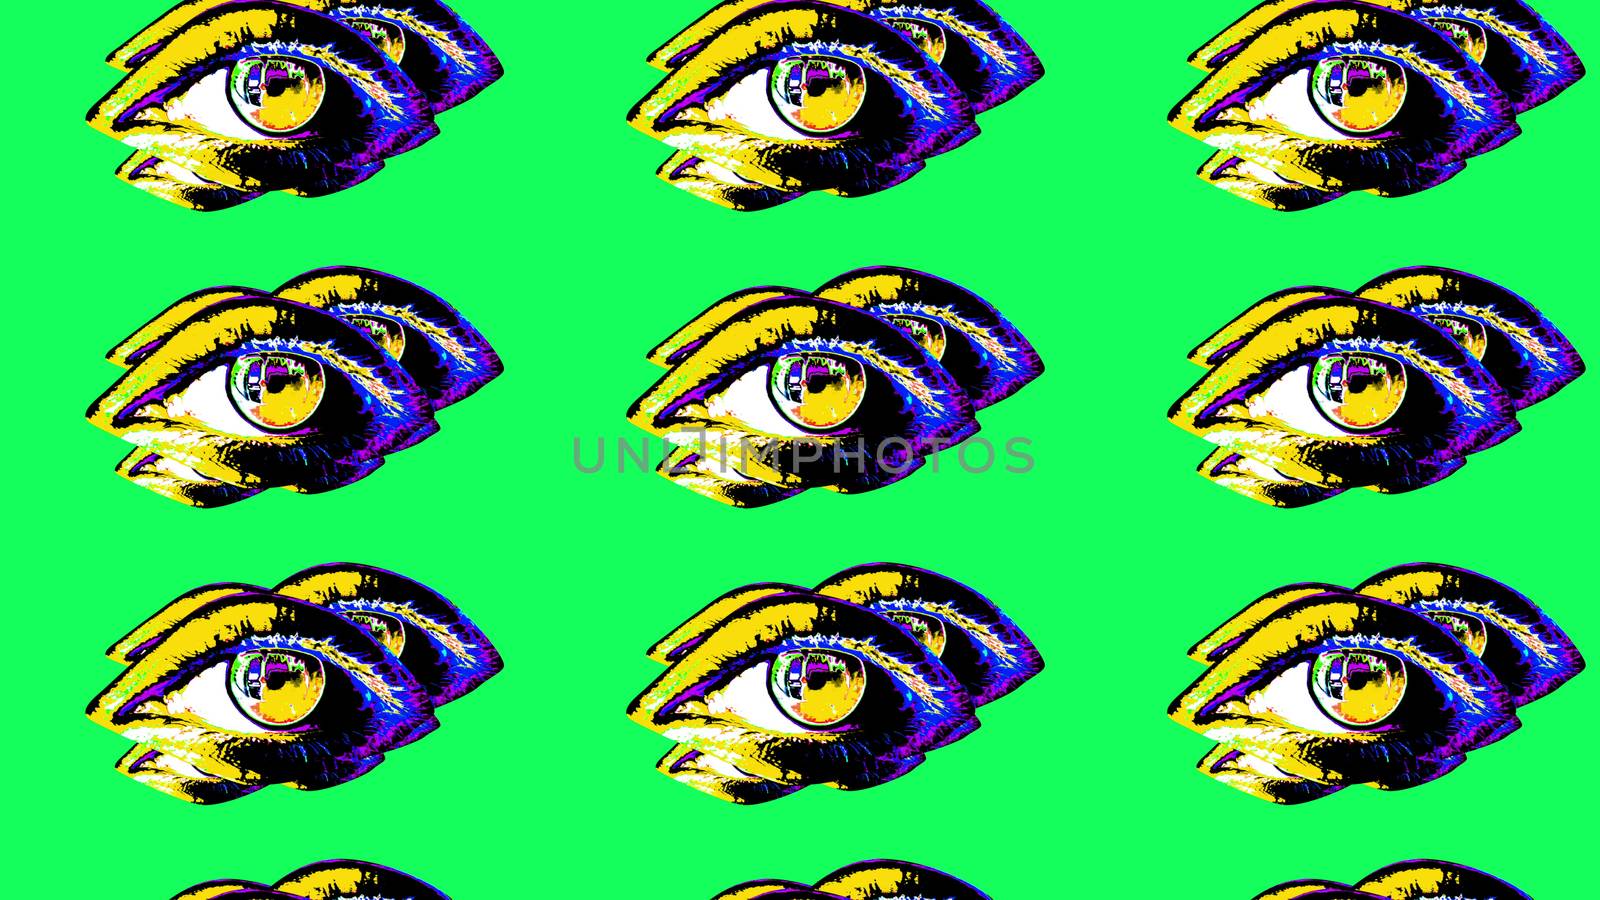 A pop-art 3d illustration of big human eyes on a green background.